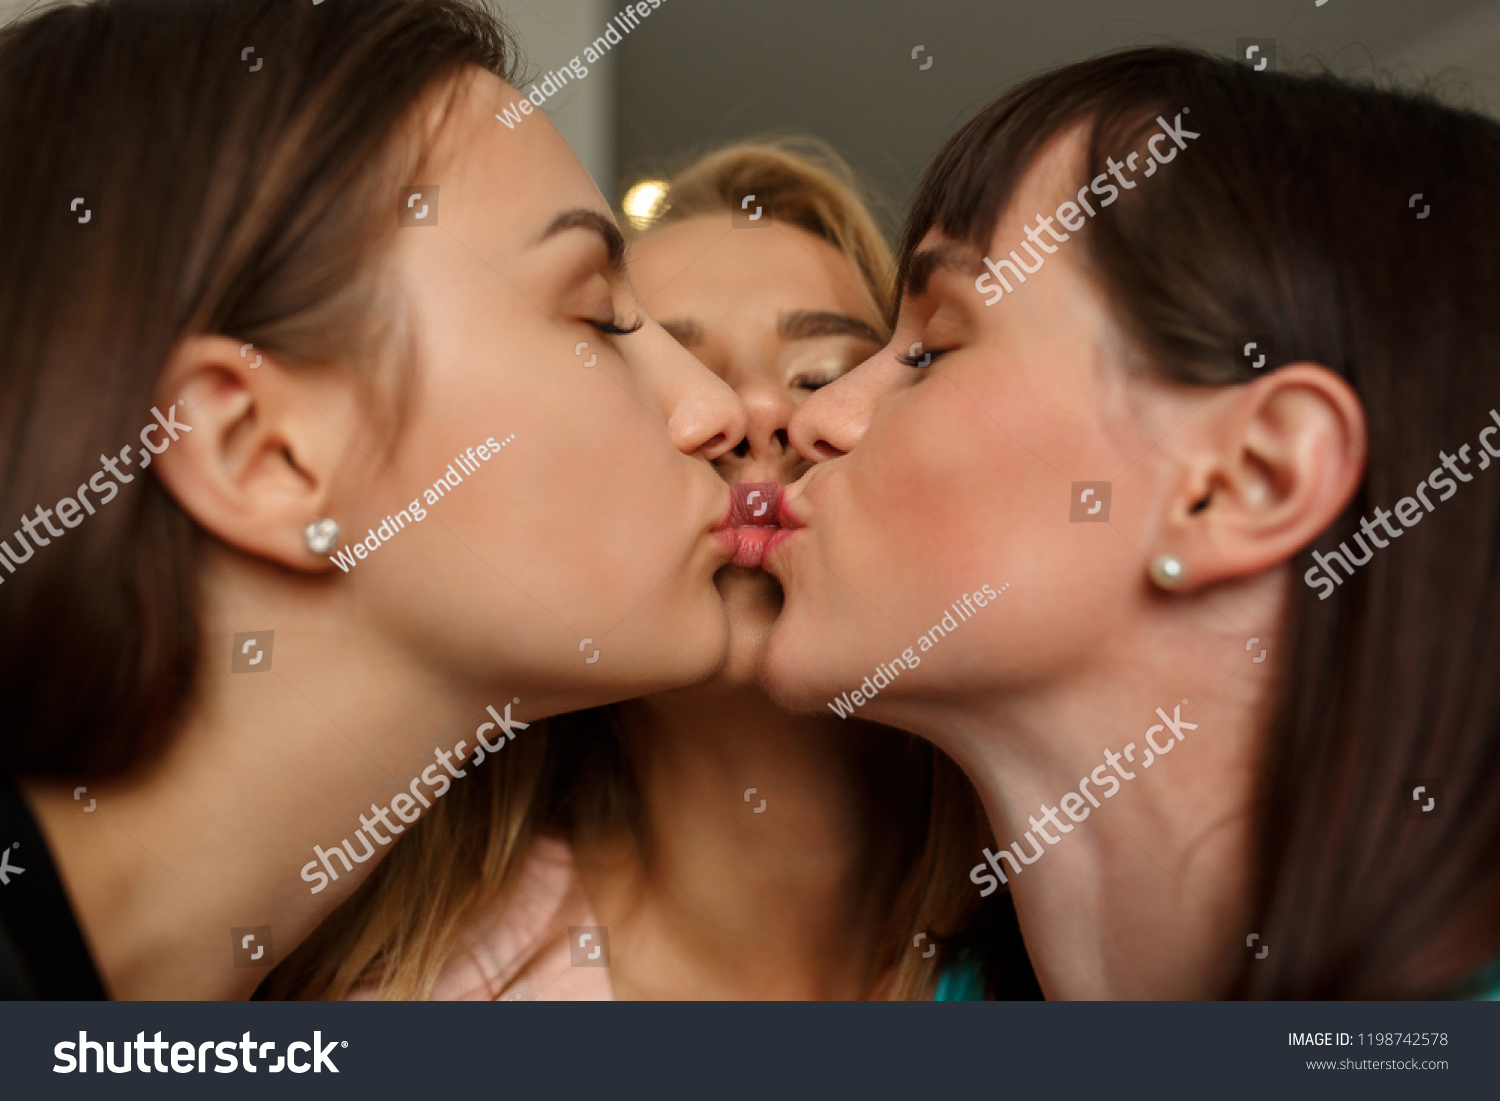 Lesbian kiss banque d'images